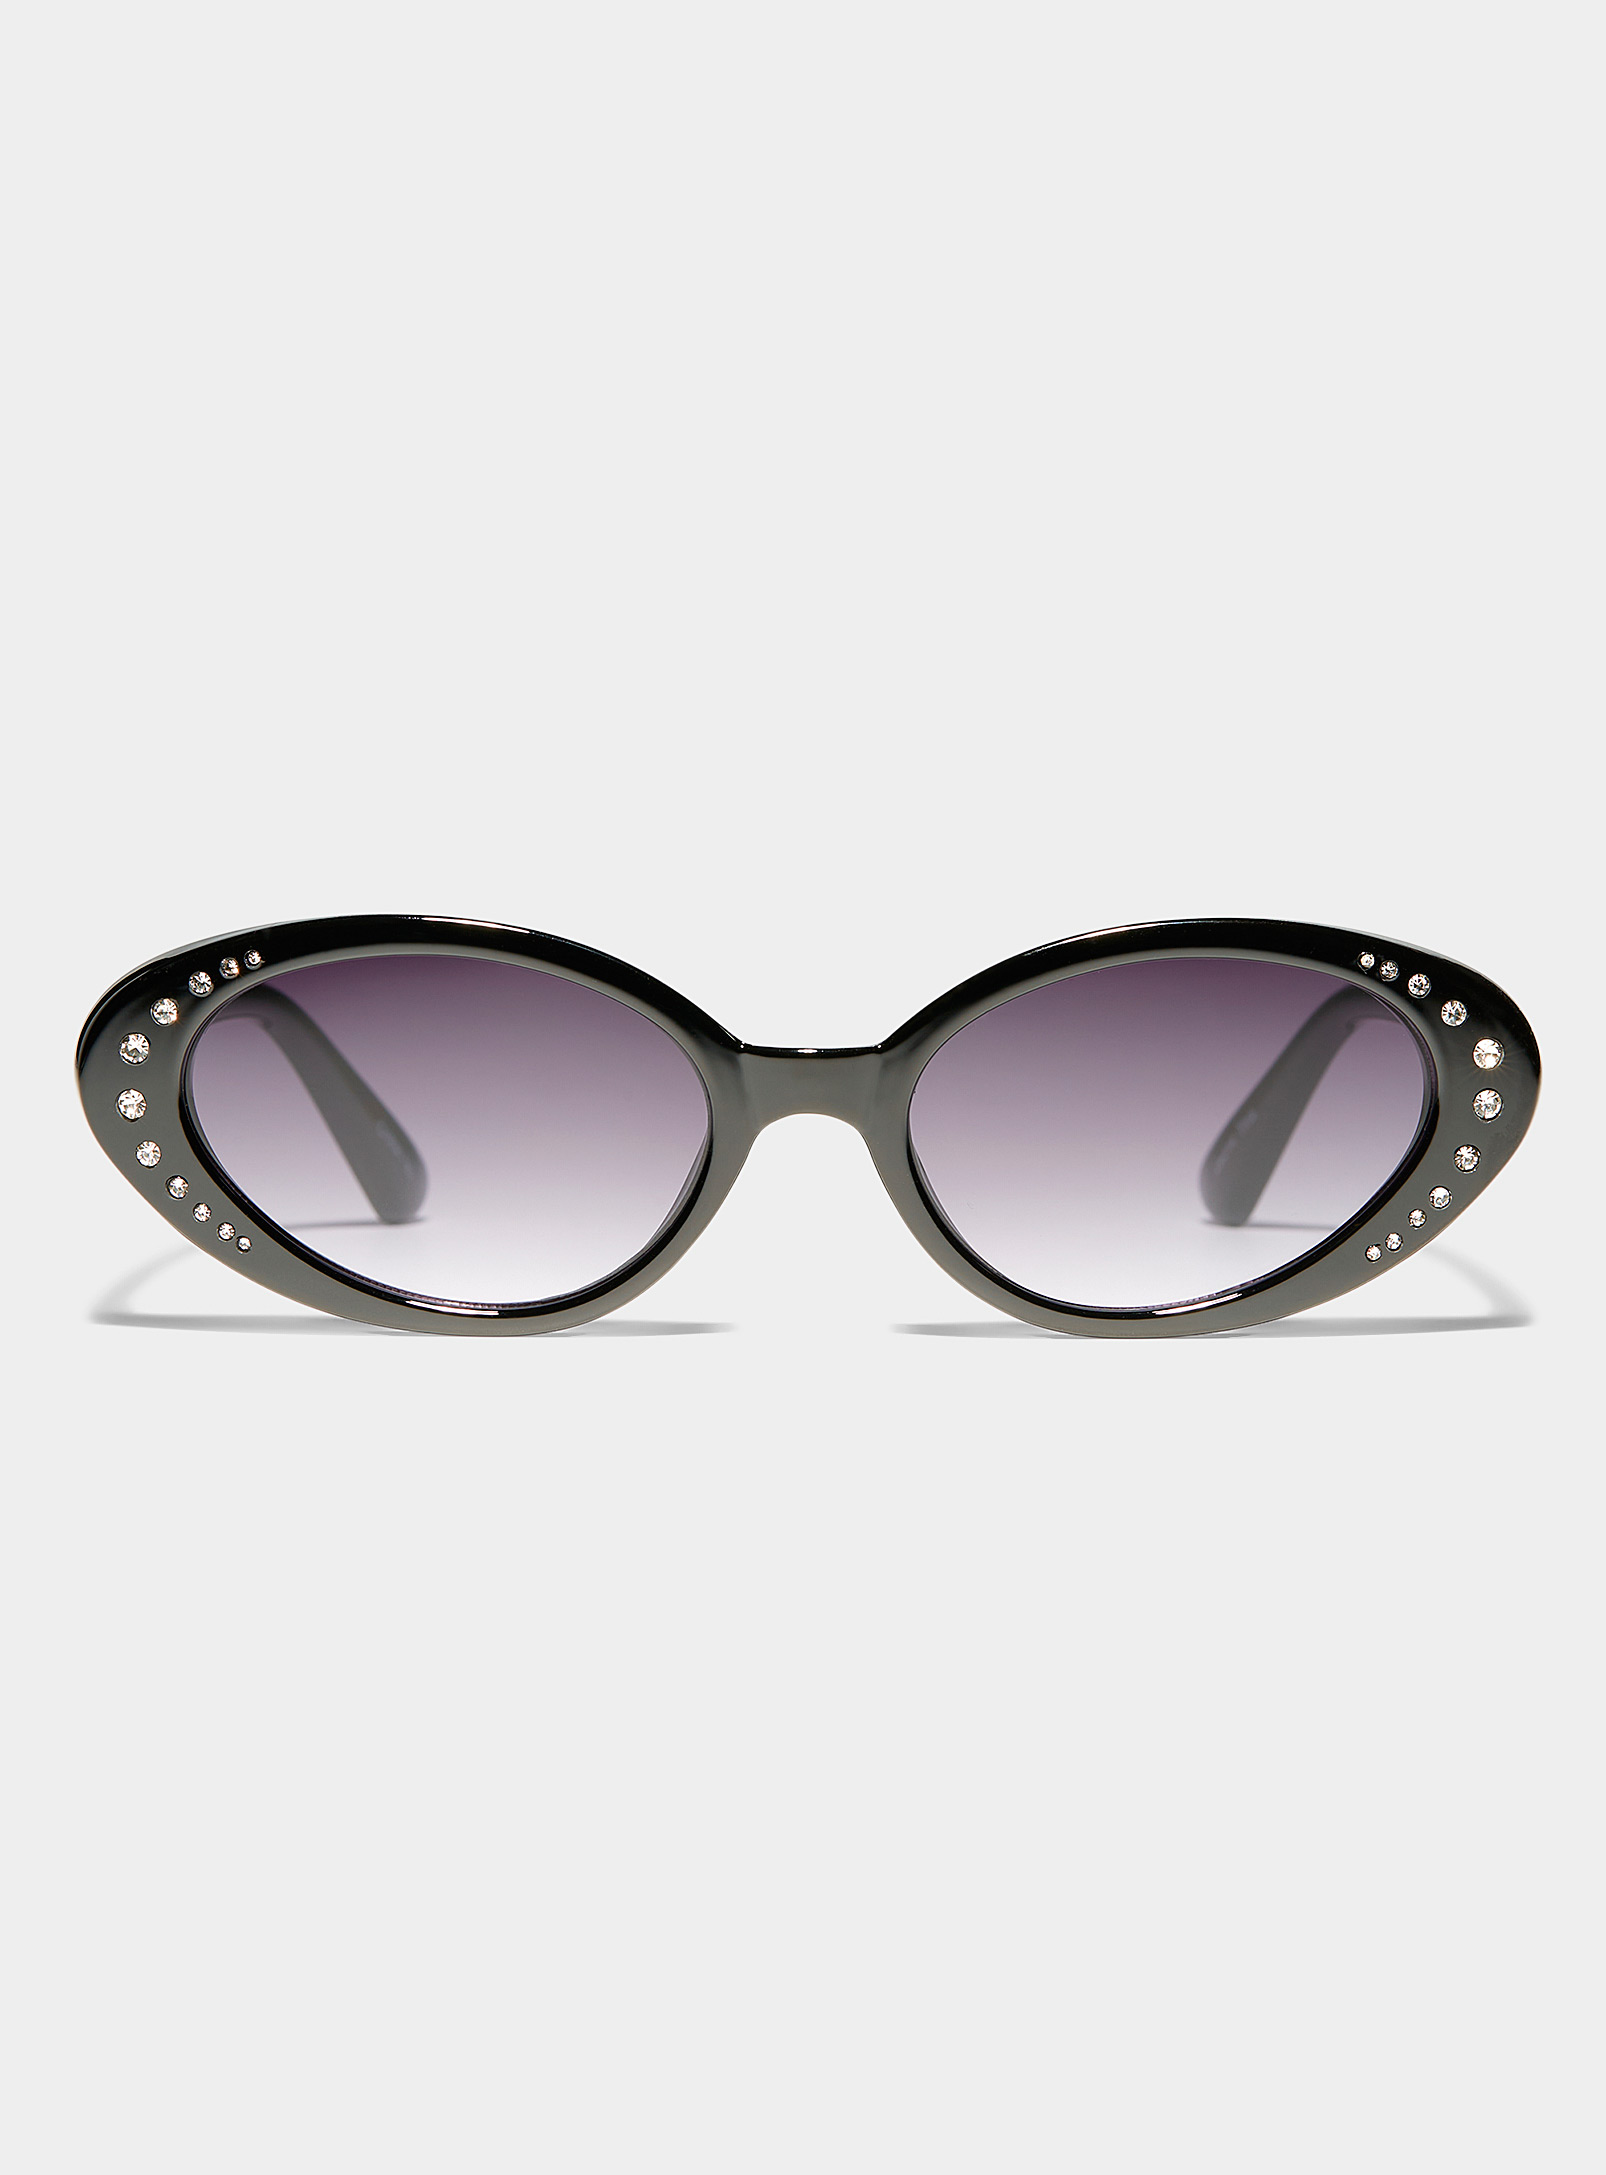 Simons - Women's Tina oval sunglasses